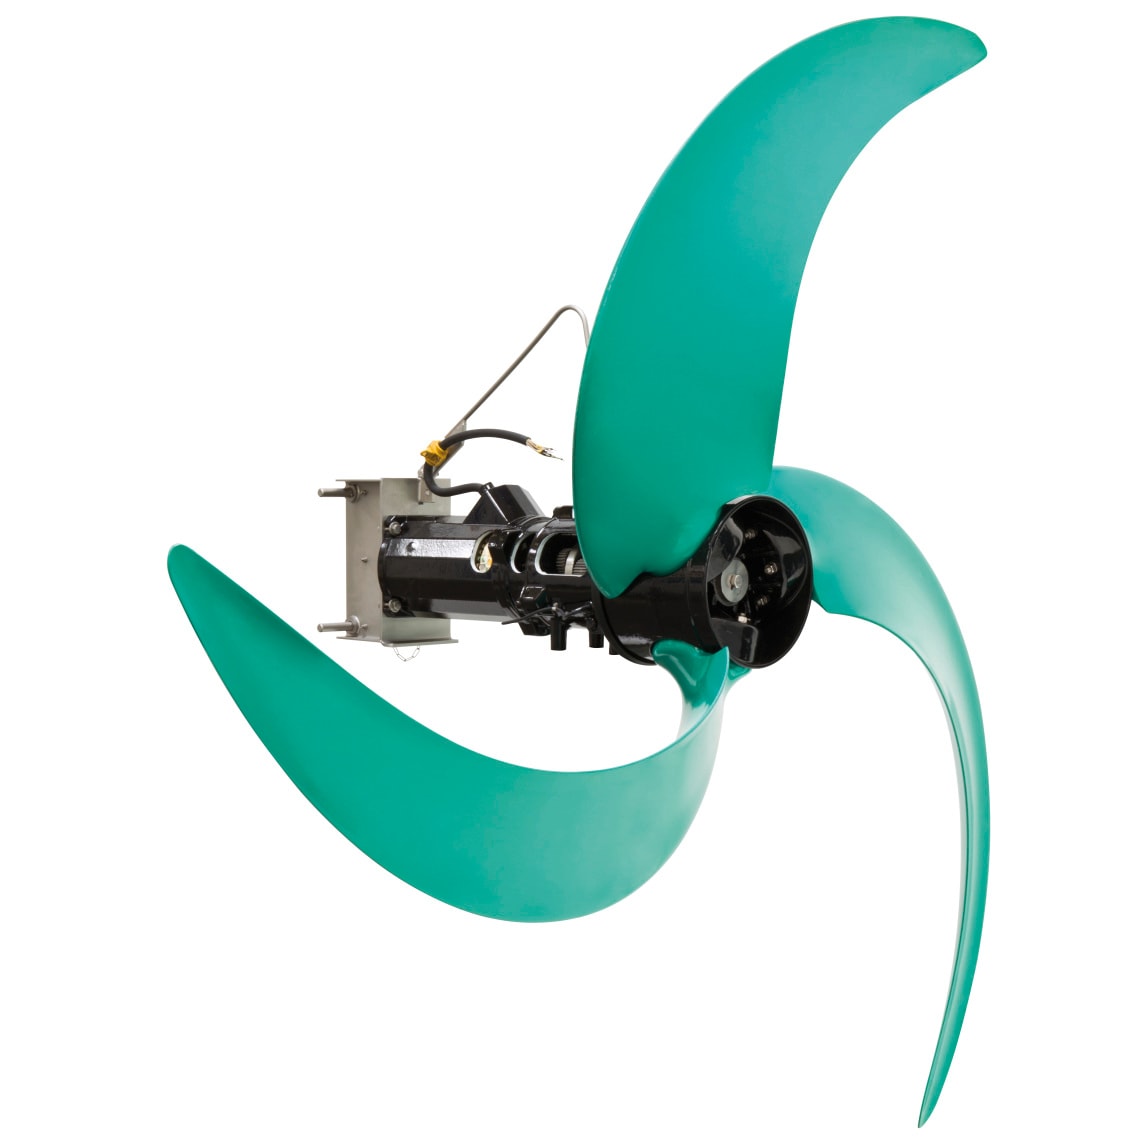 Slow-running submersible mixer